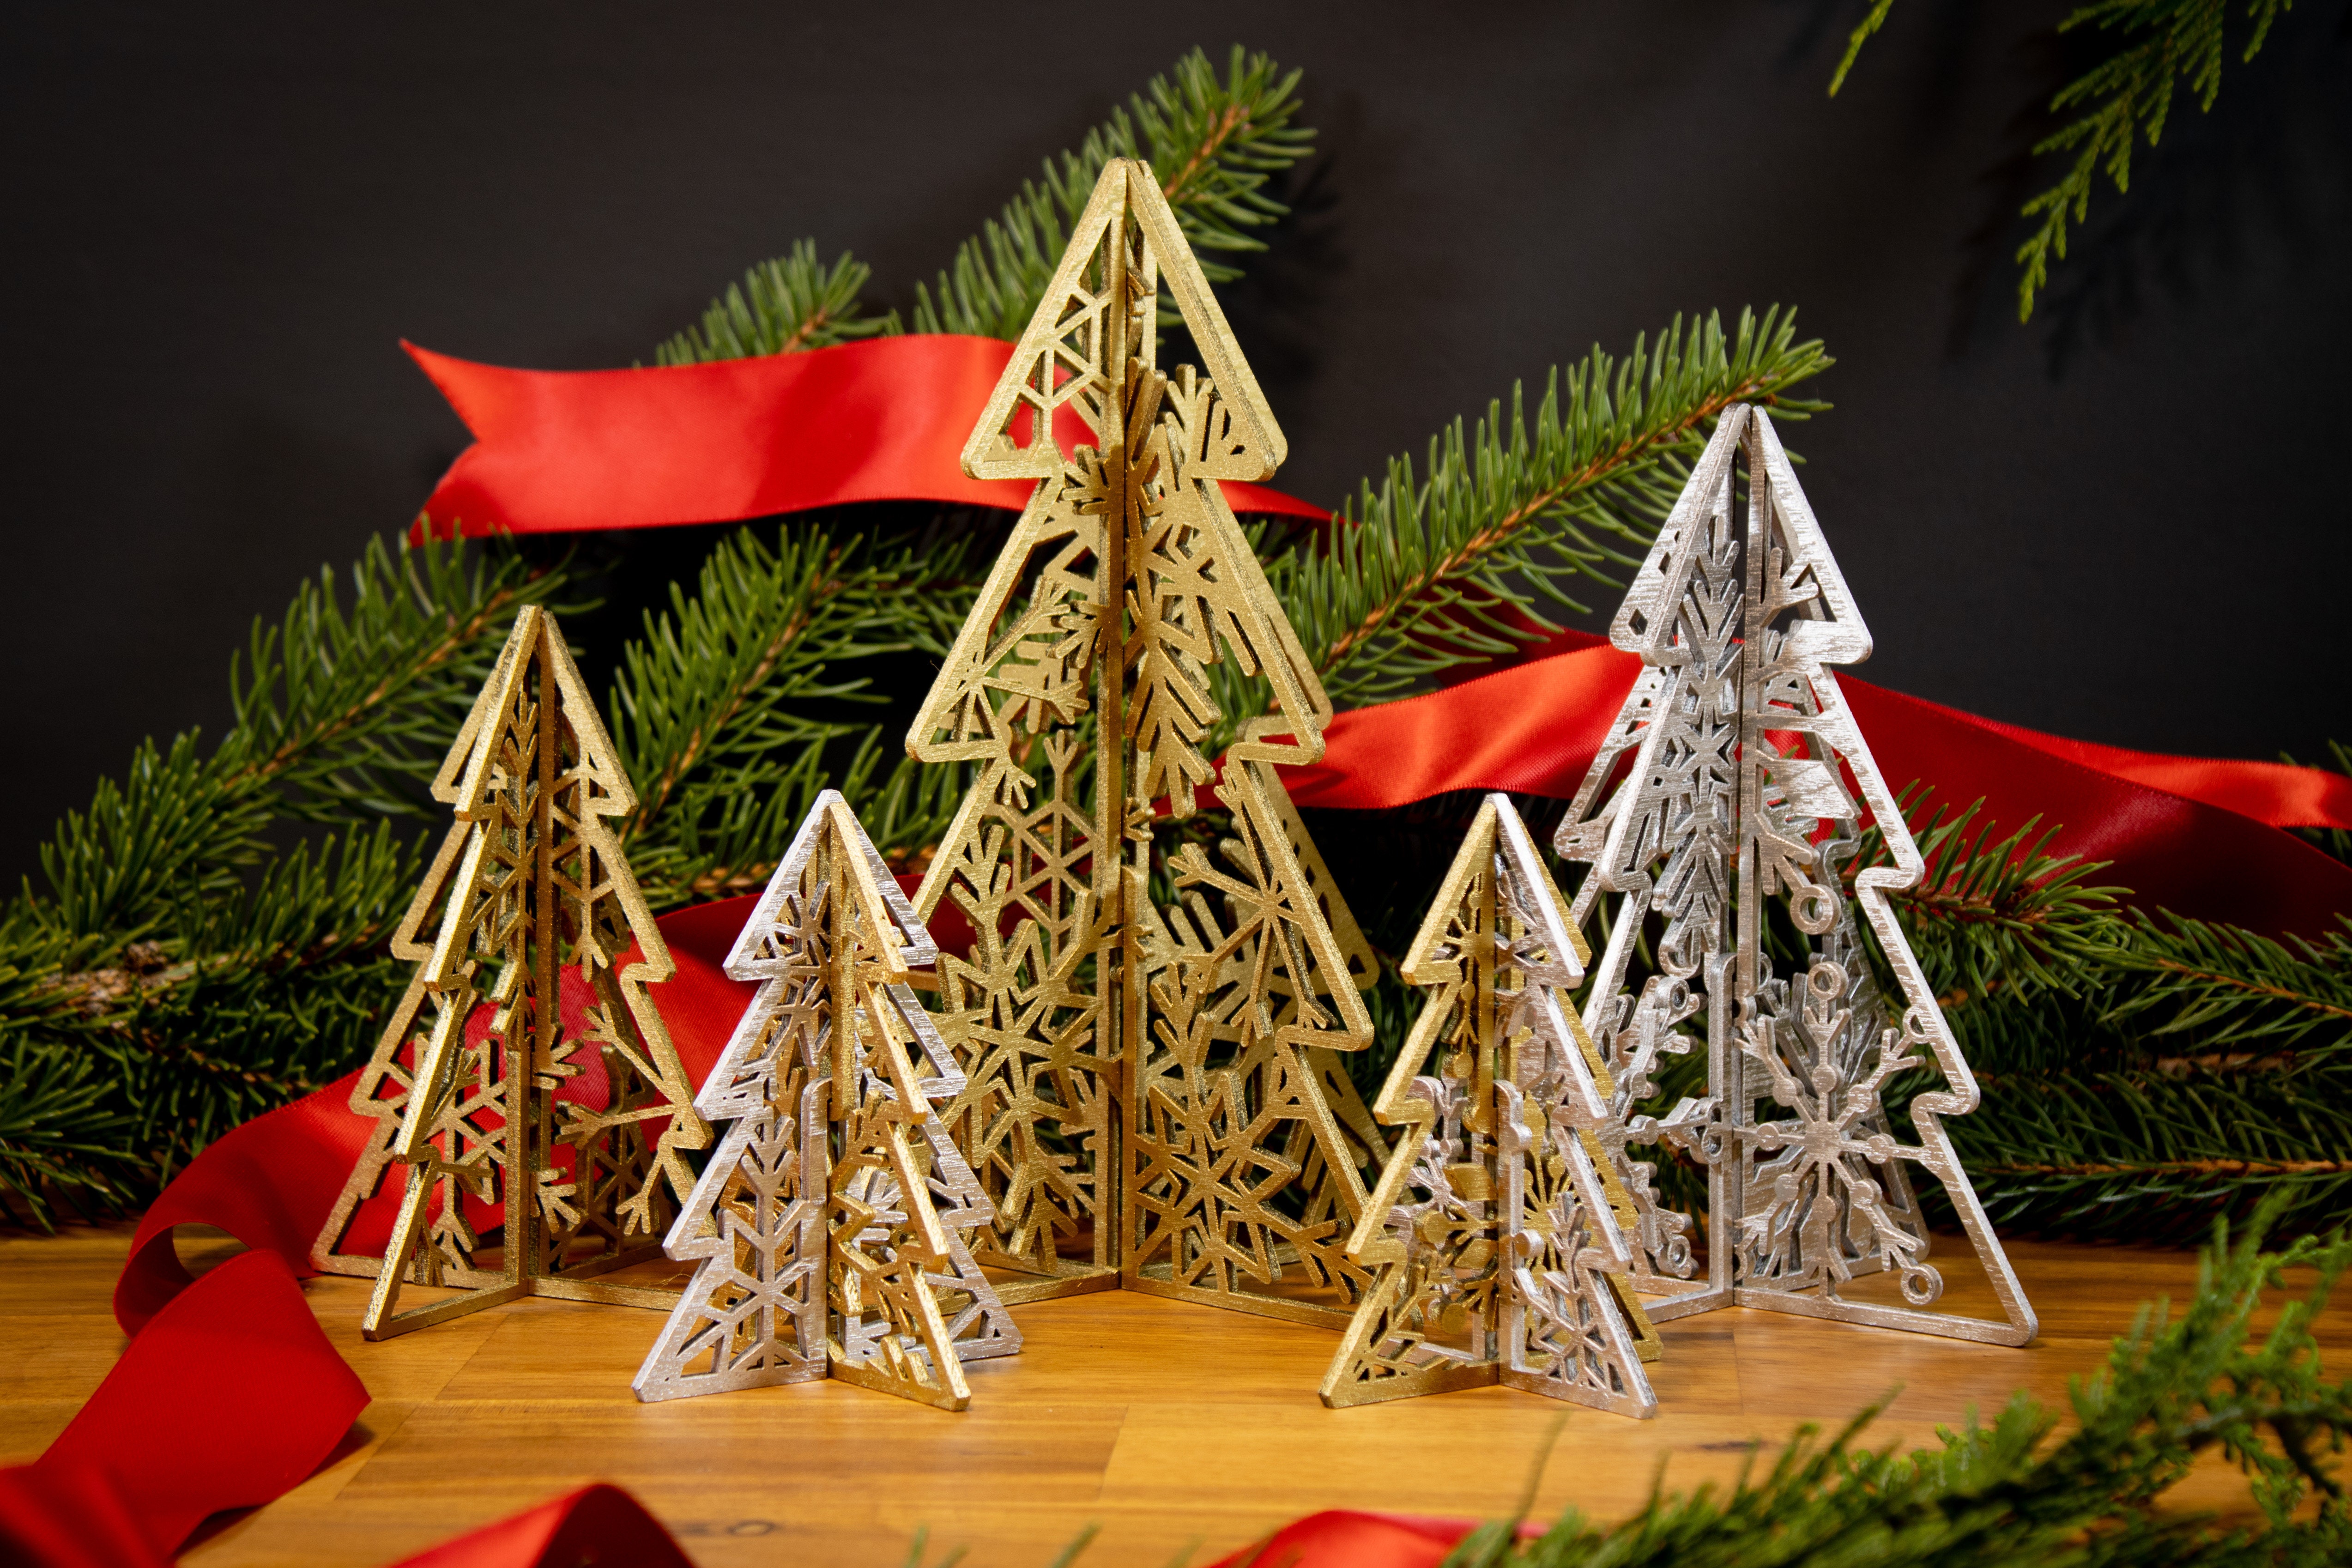 Unique Christmas Decorations From Etsy Shops - Sunset Magazine